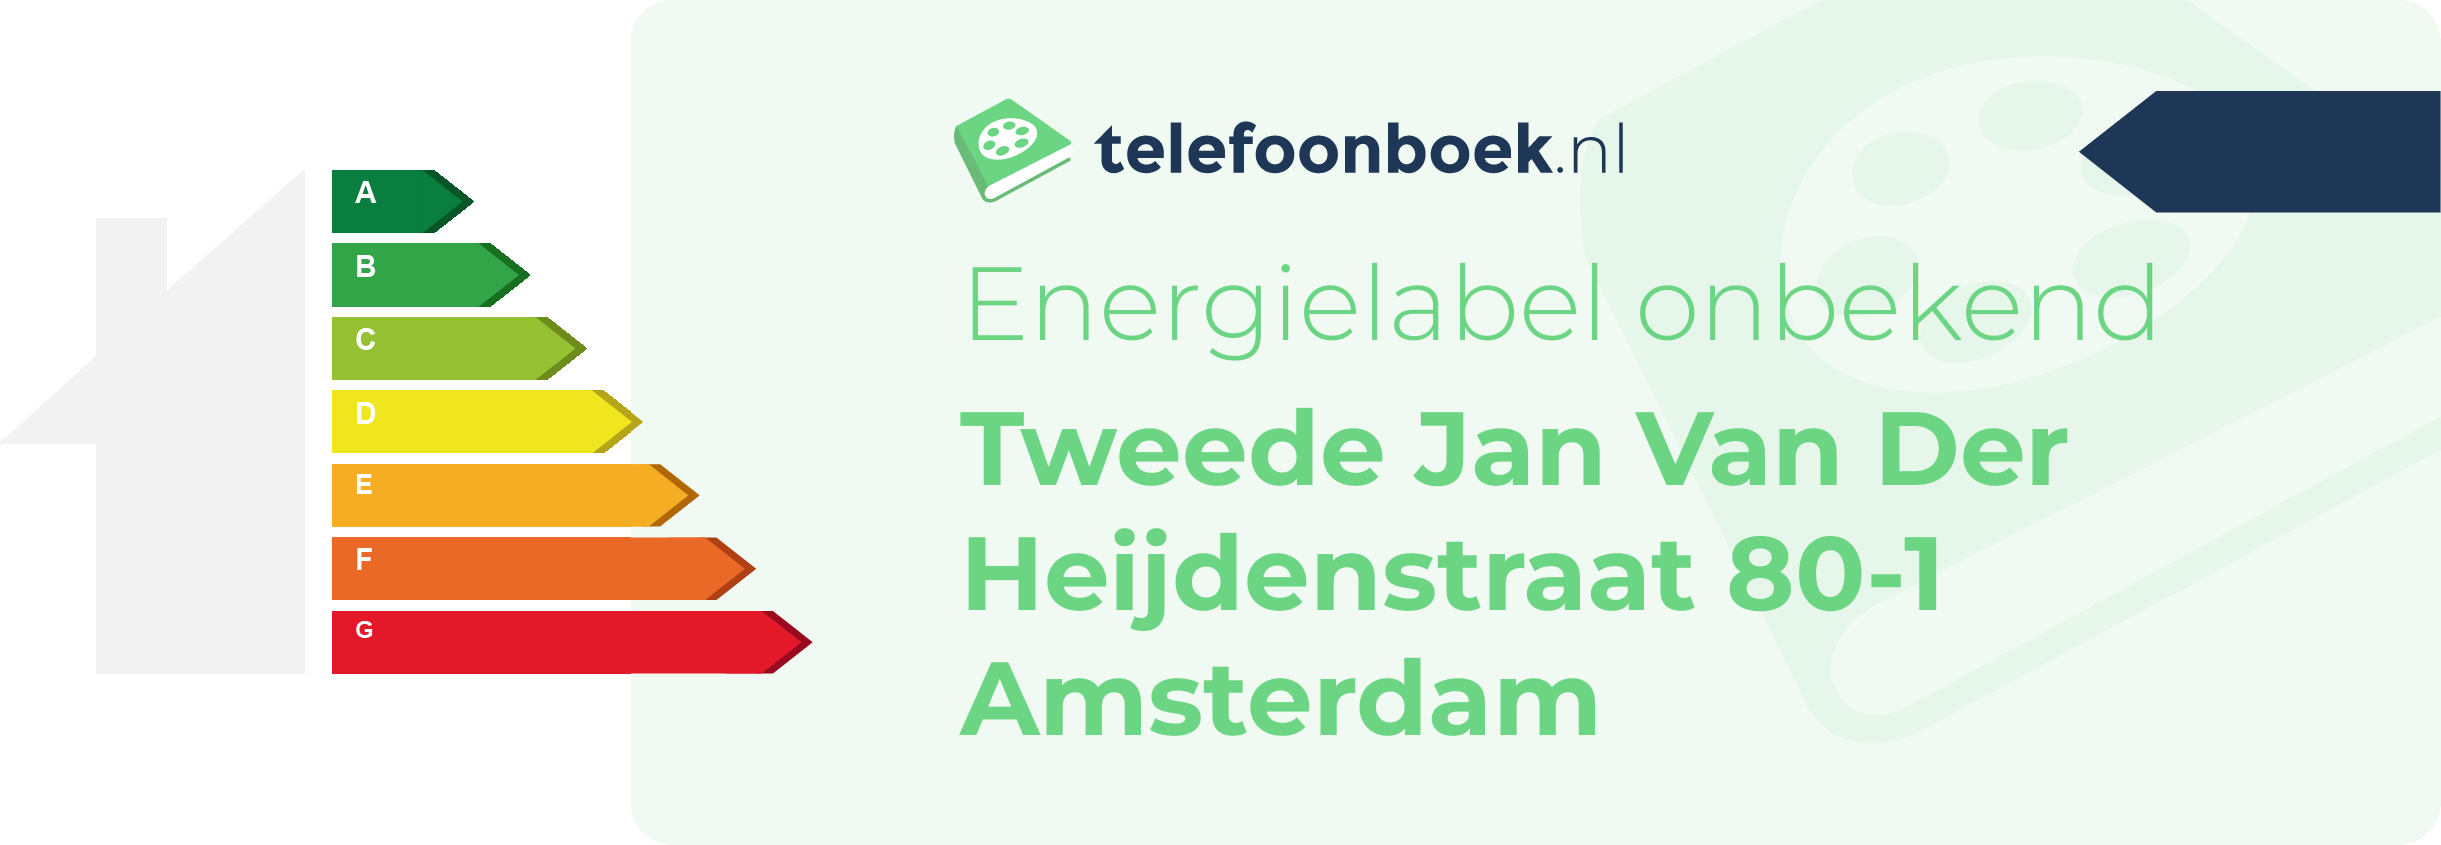 Energielabel Tweede Jan Van Der Heijdenstraat 80-1 Amsterdam